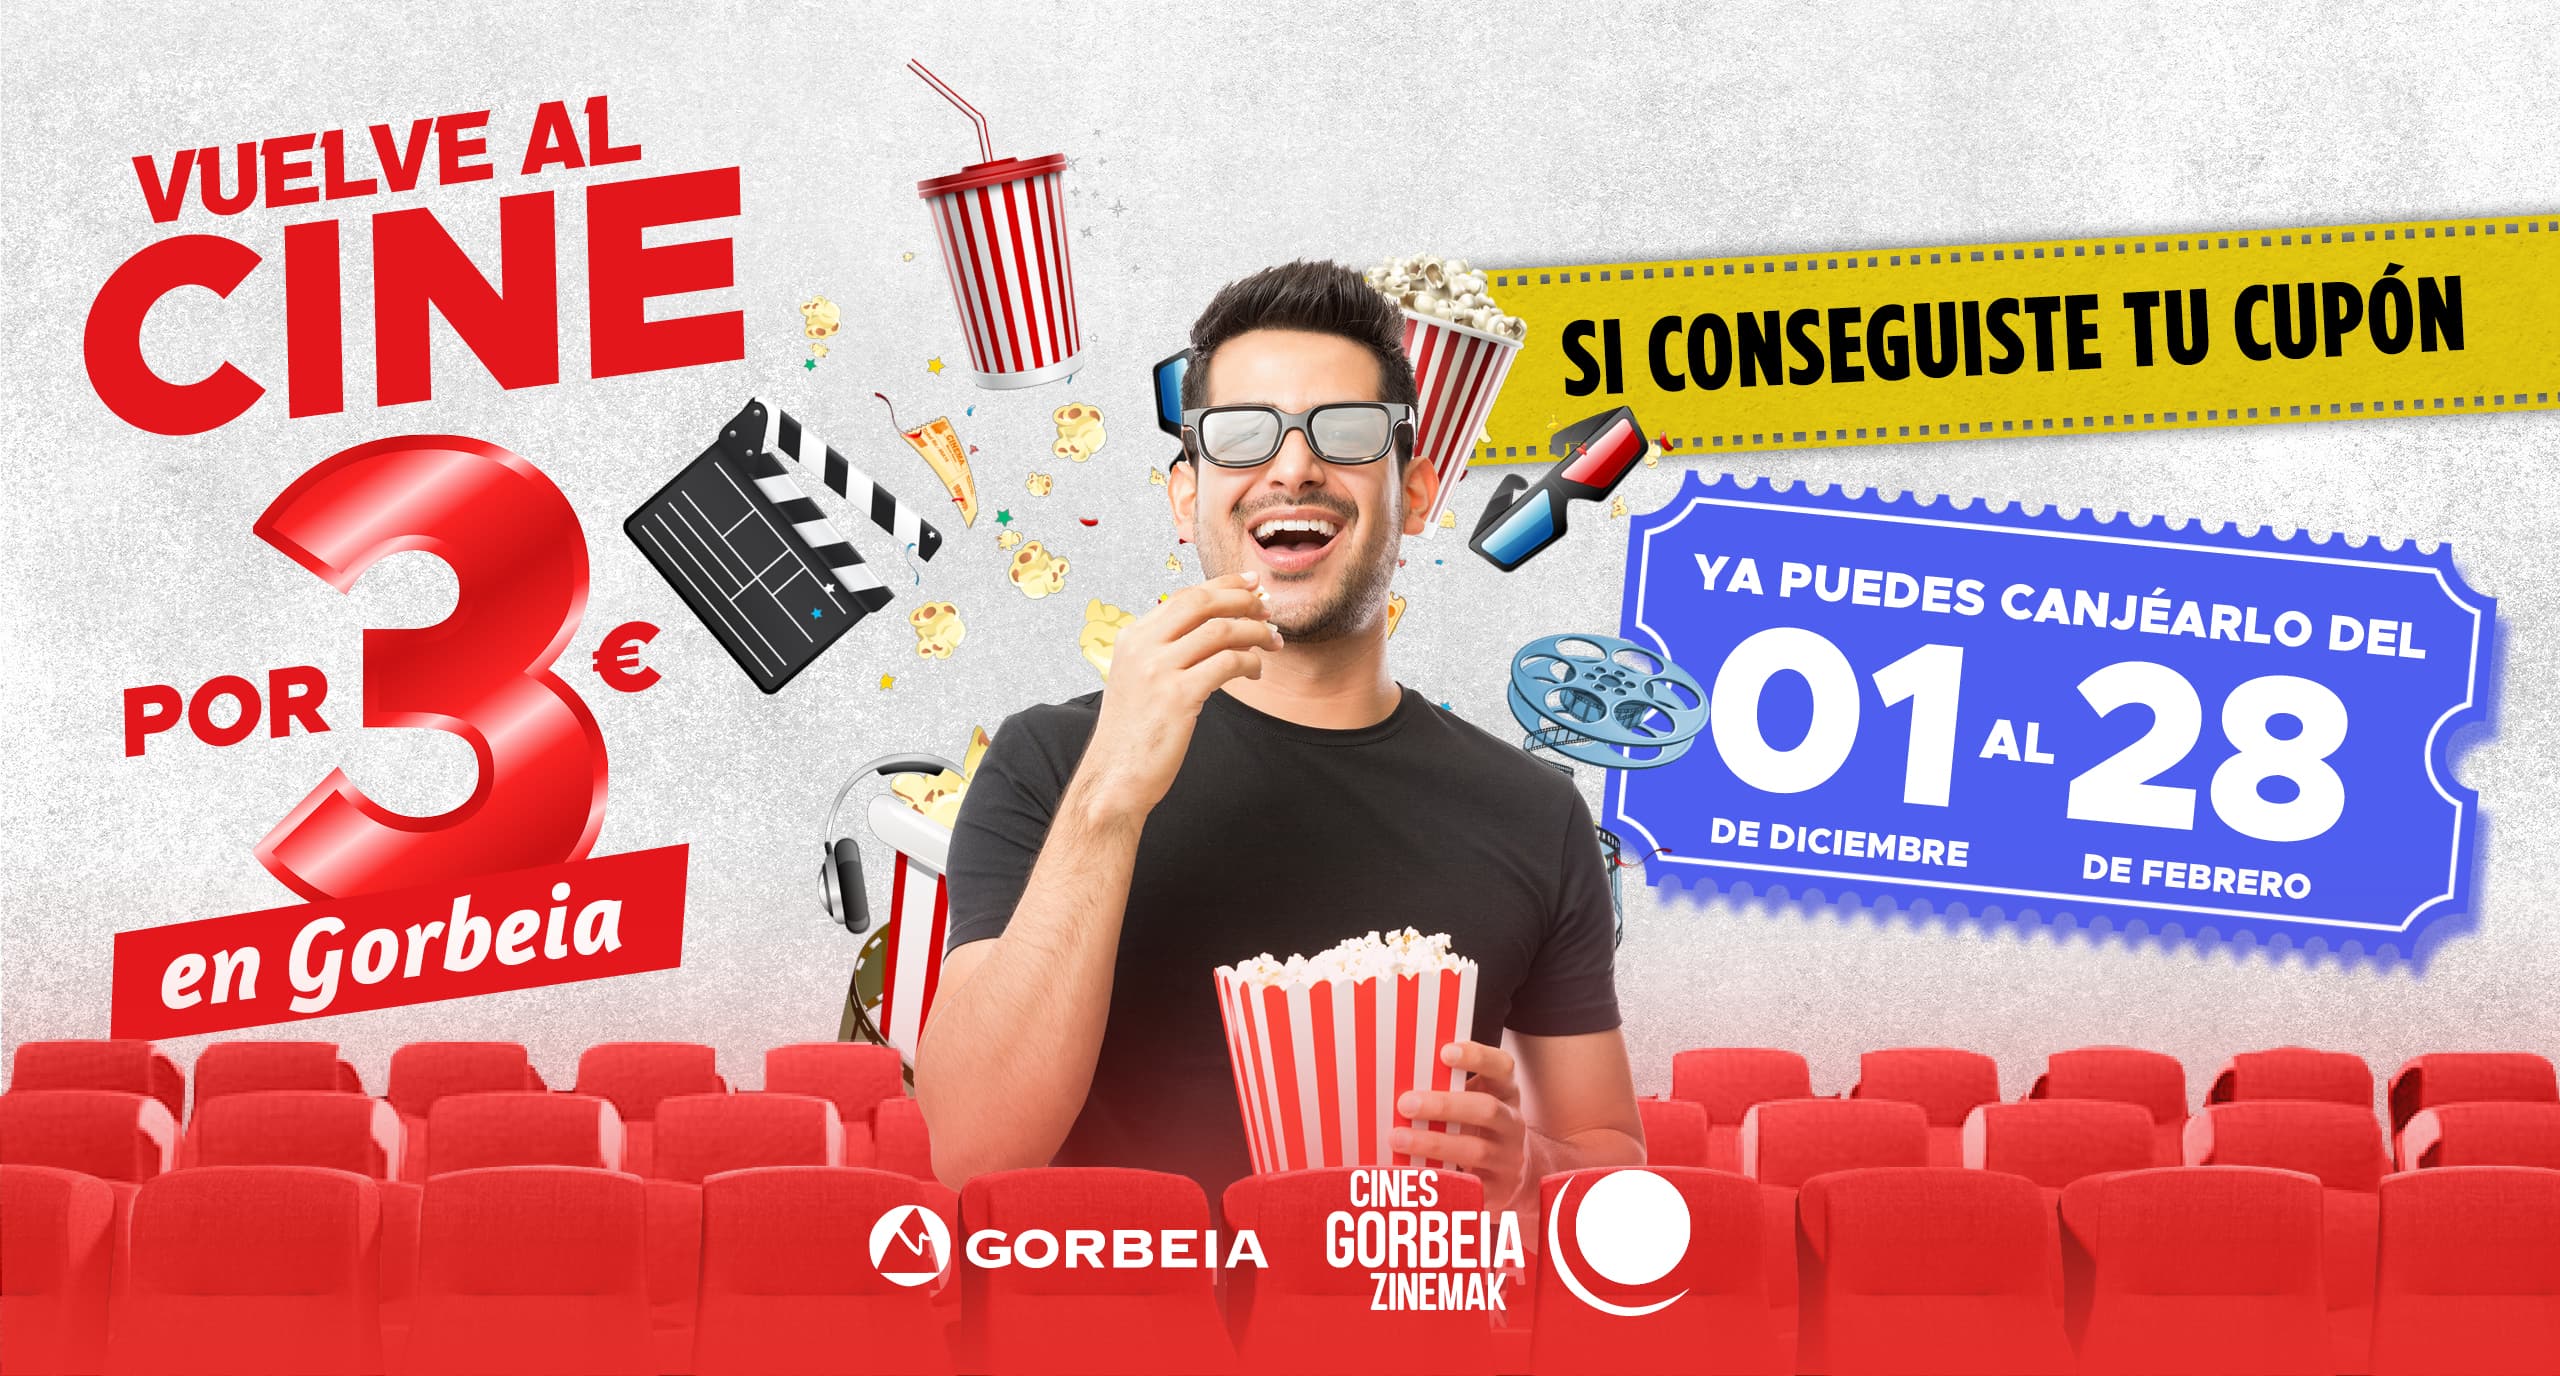 Ven a Cines Gorbeia y vuelve por 3€